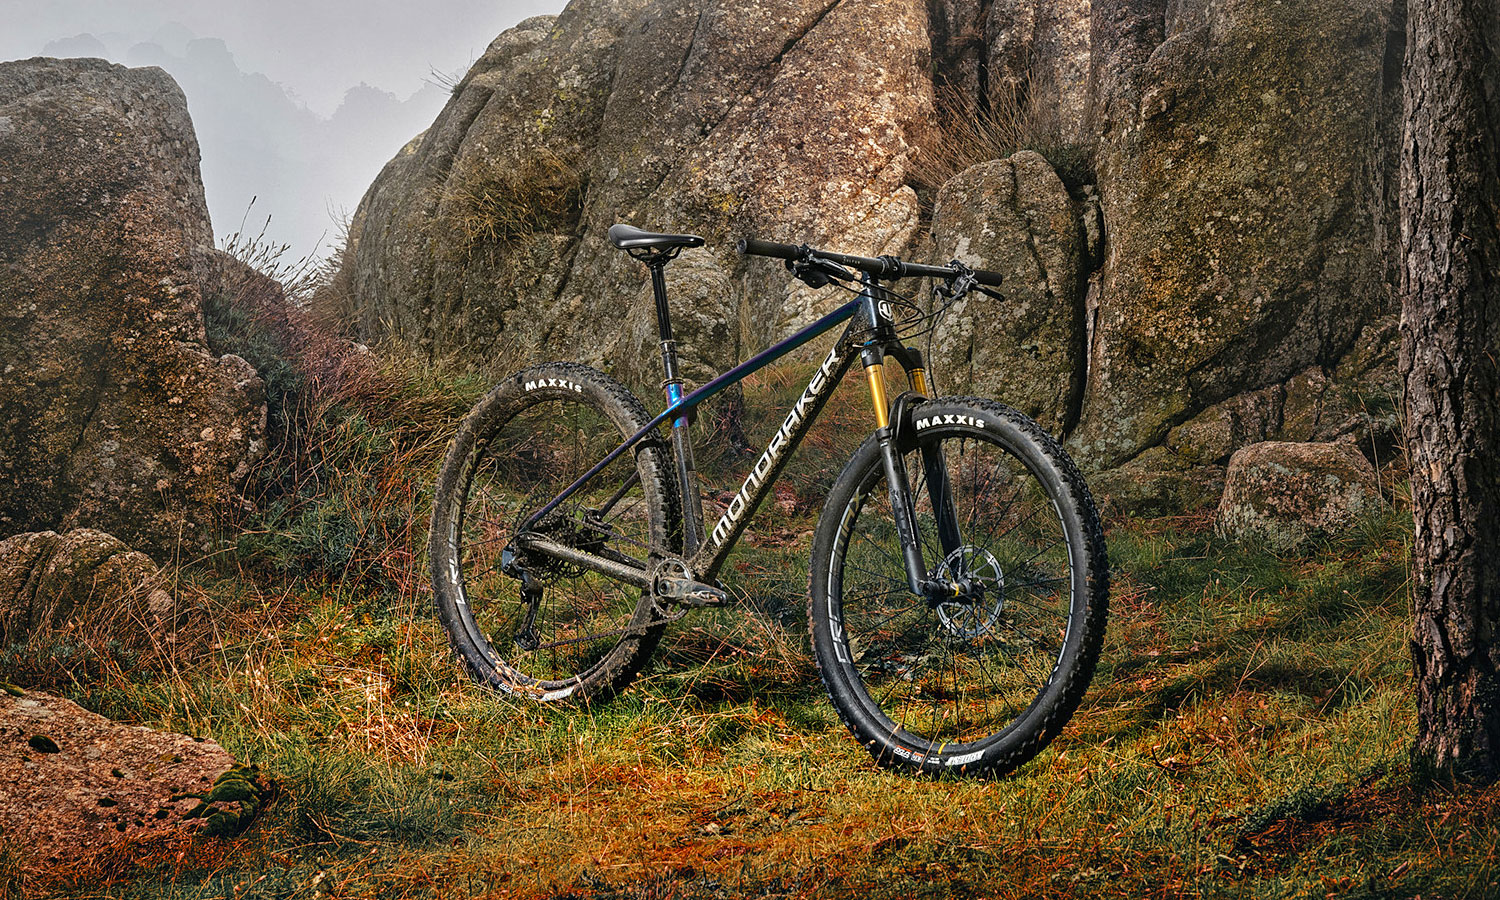 Mondraker Chrono Carbon DC progressive downcountry hardtail mountain bike, bike in the forest